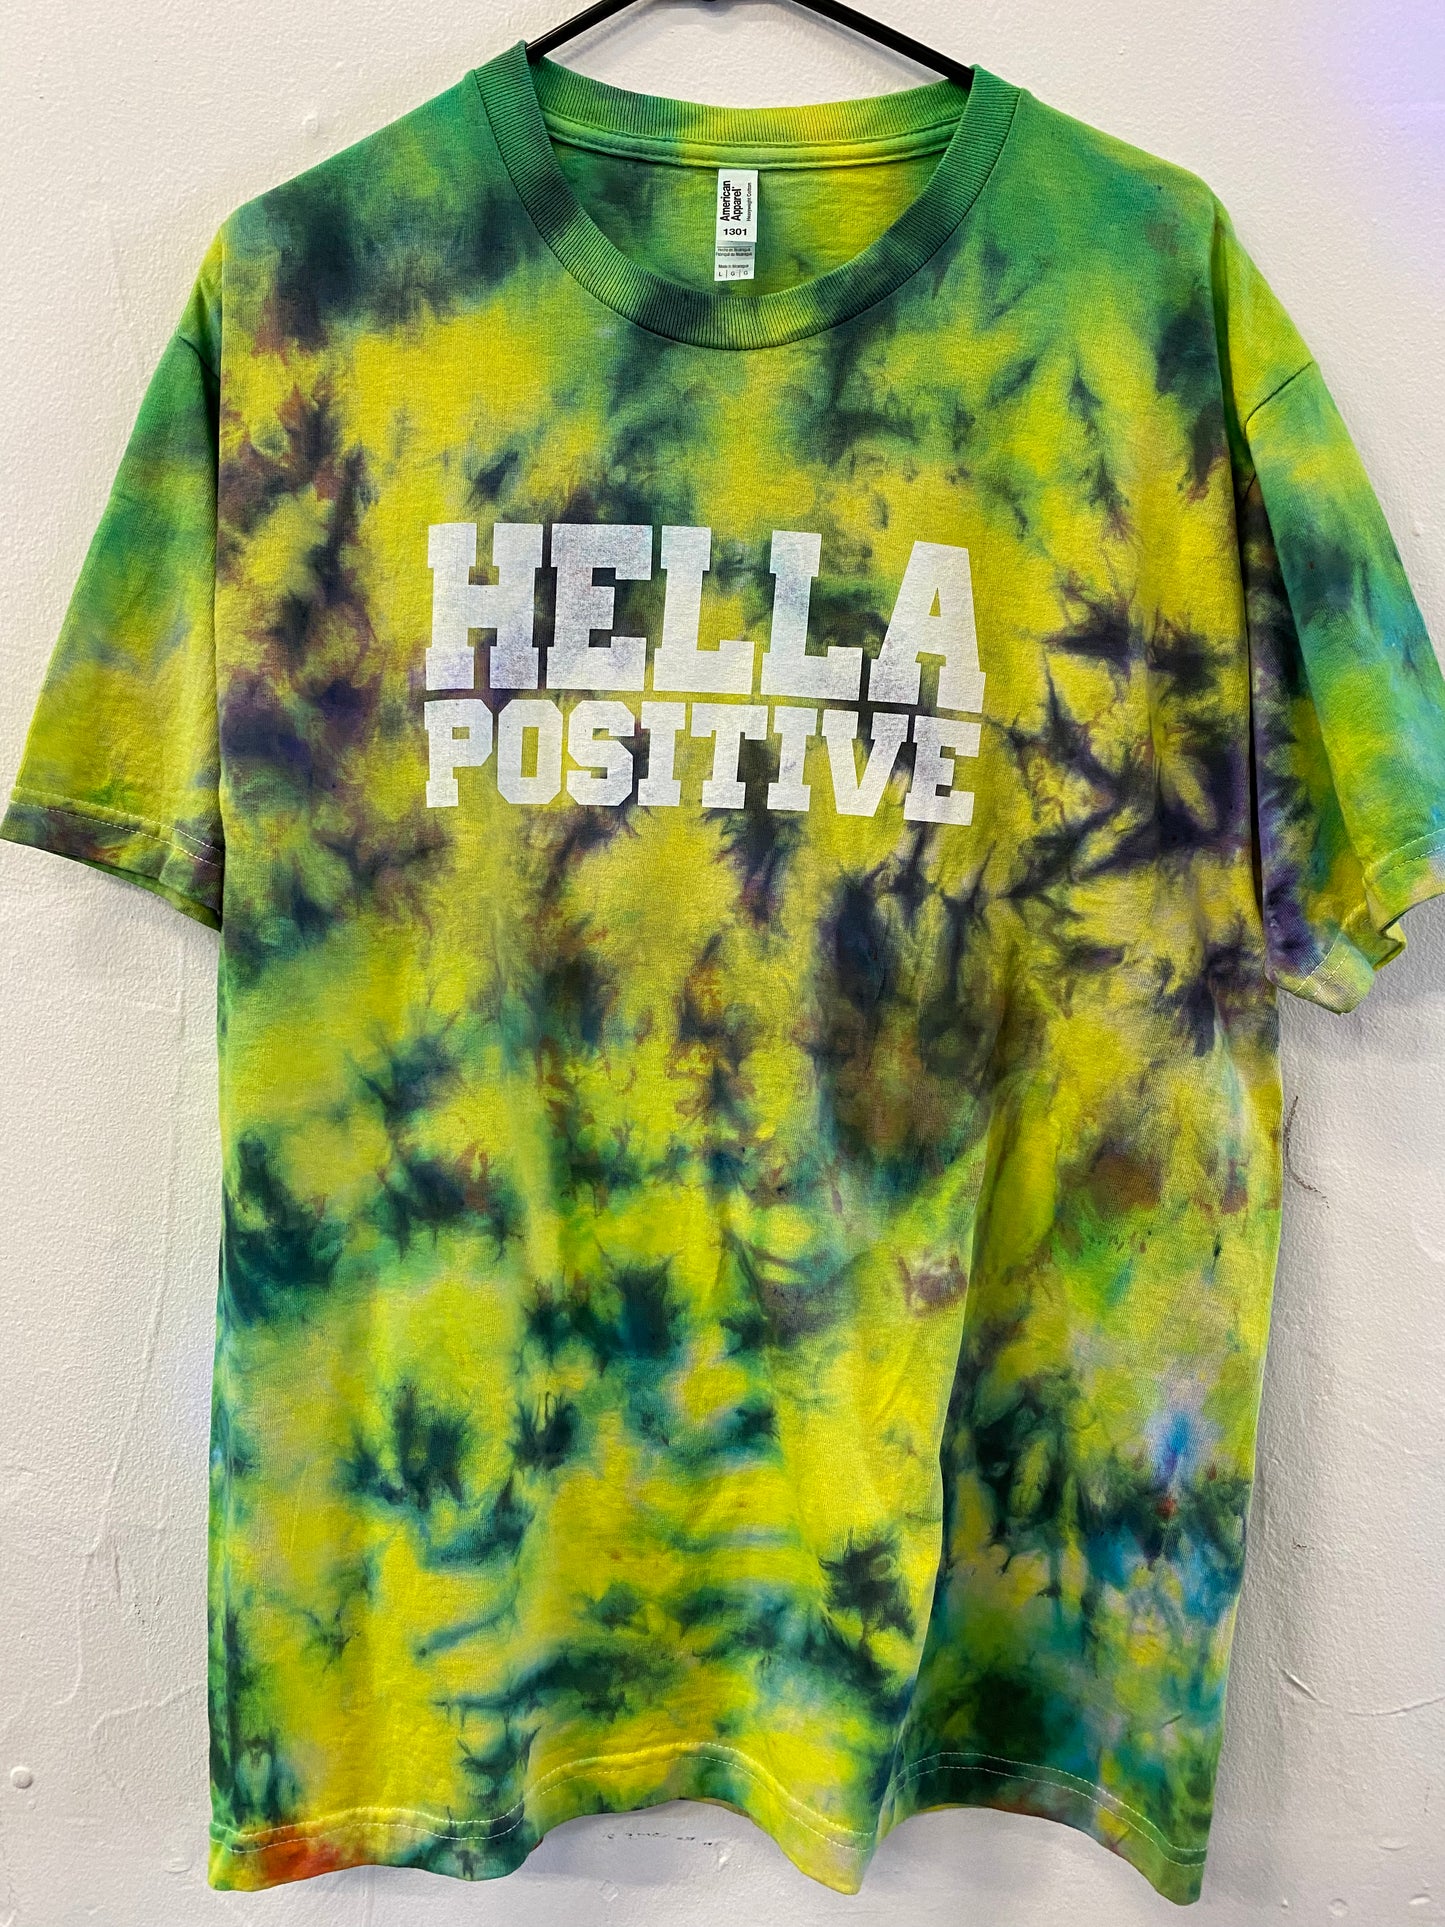 Hella Positive Tie Dye T shirt - Large